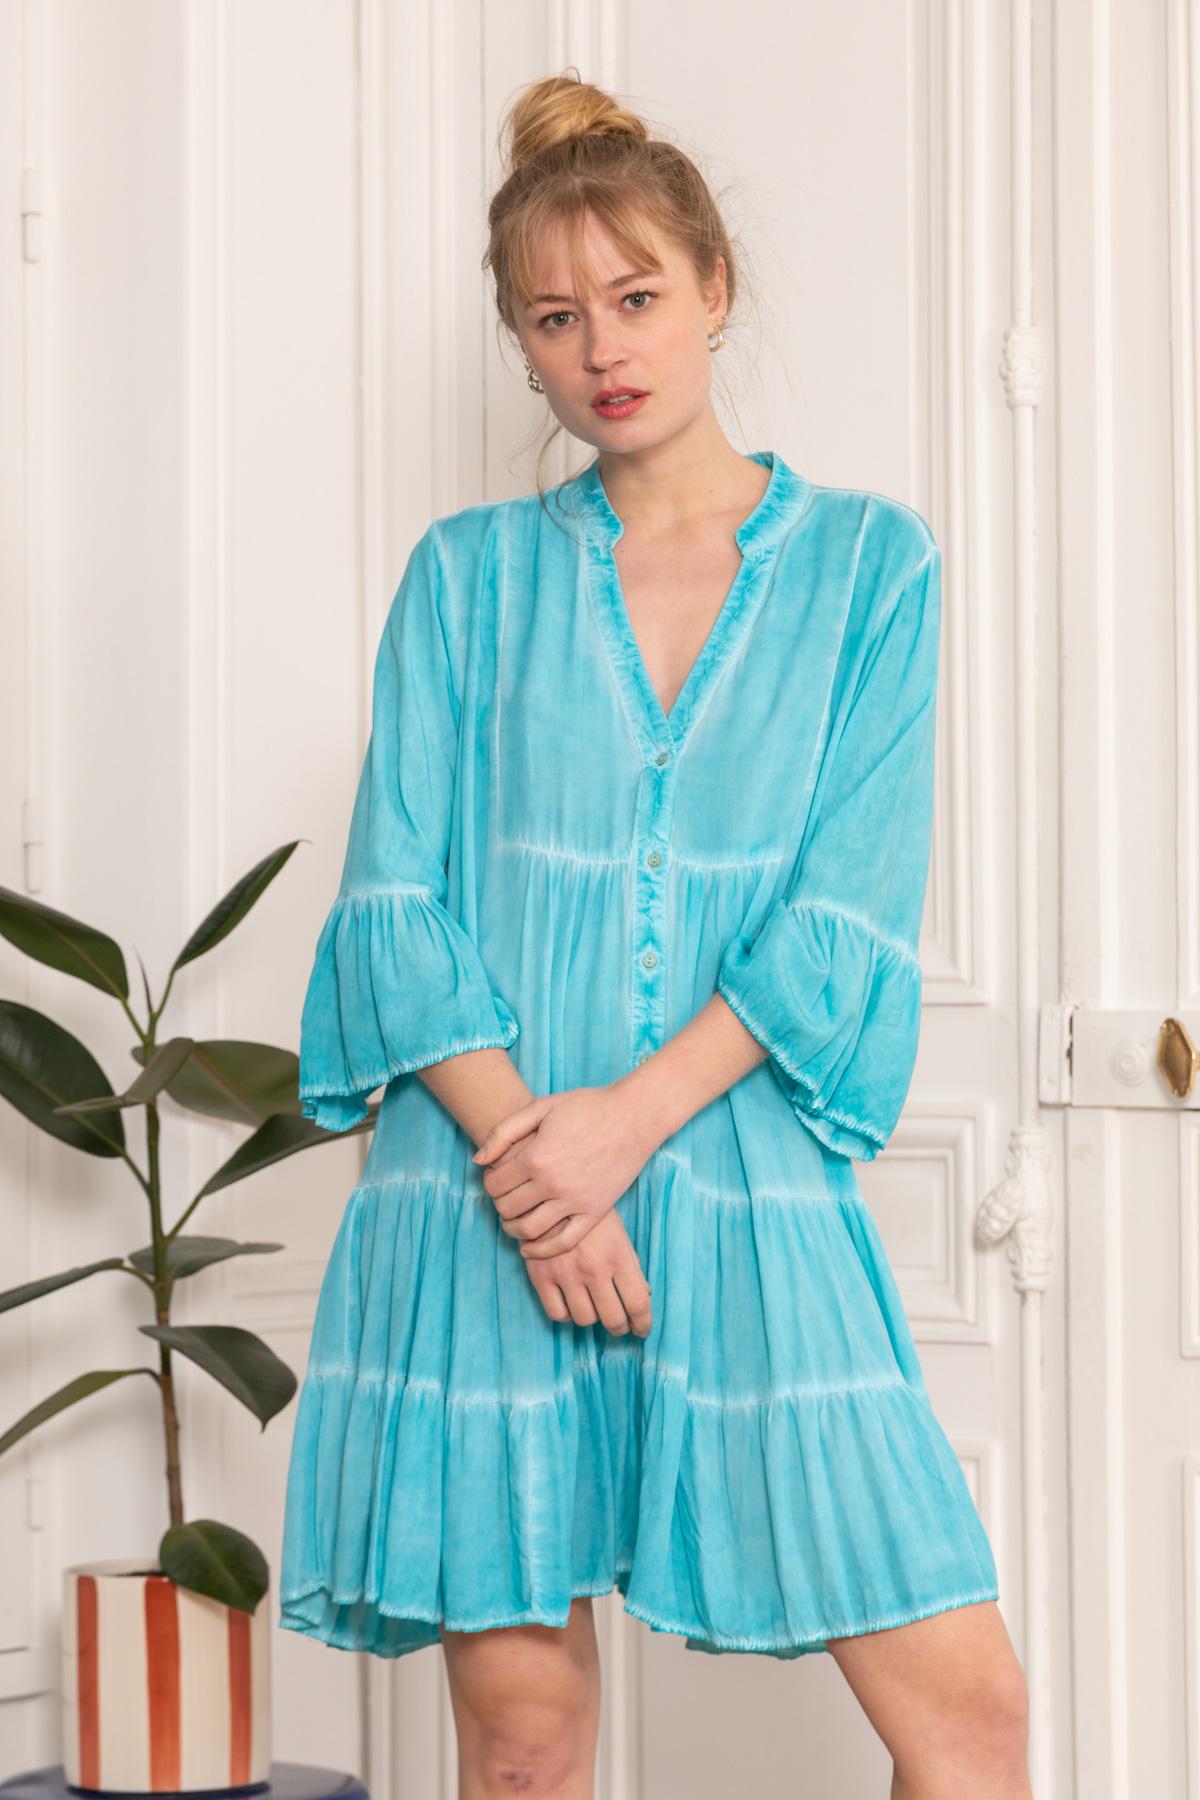 Vestidos cortos Mujer Turquoise LAST QUEEN 8985-0037 #c Efashion Paris